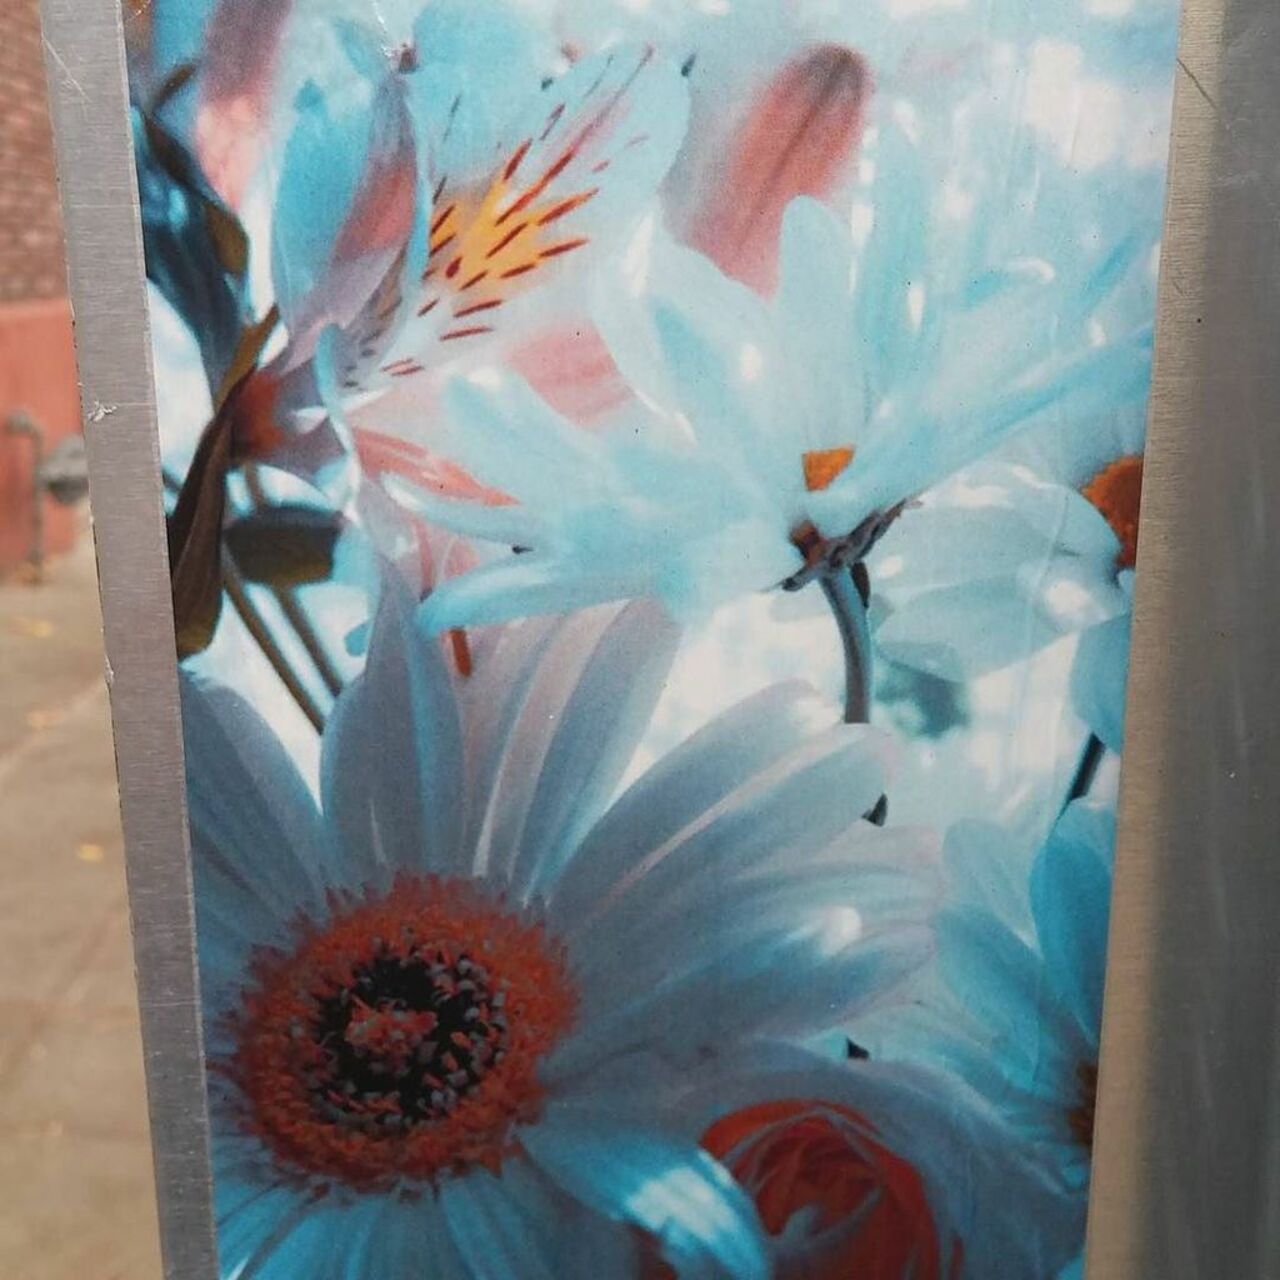 #seattle #streetart #urban #urbanart #graffiti #artsy #instagraffiti #daisy #flowers https://t.co/h6pzb7OS61